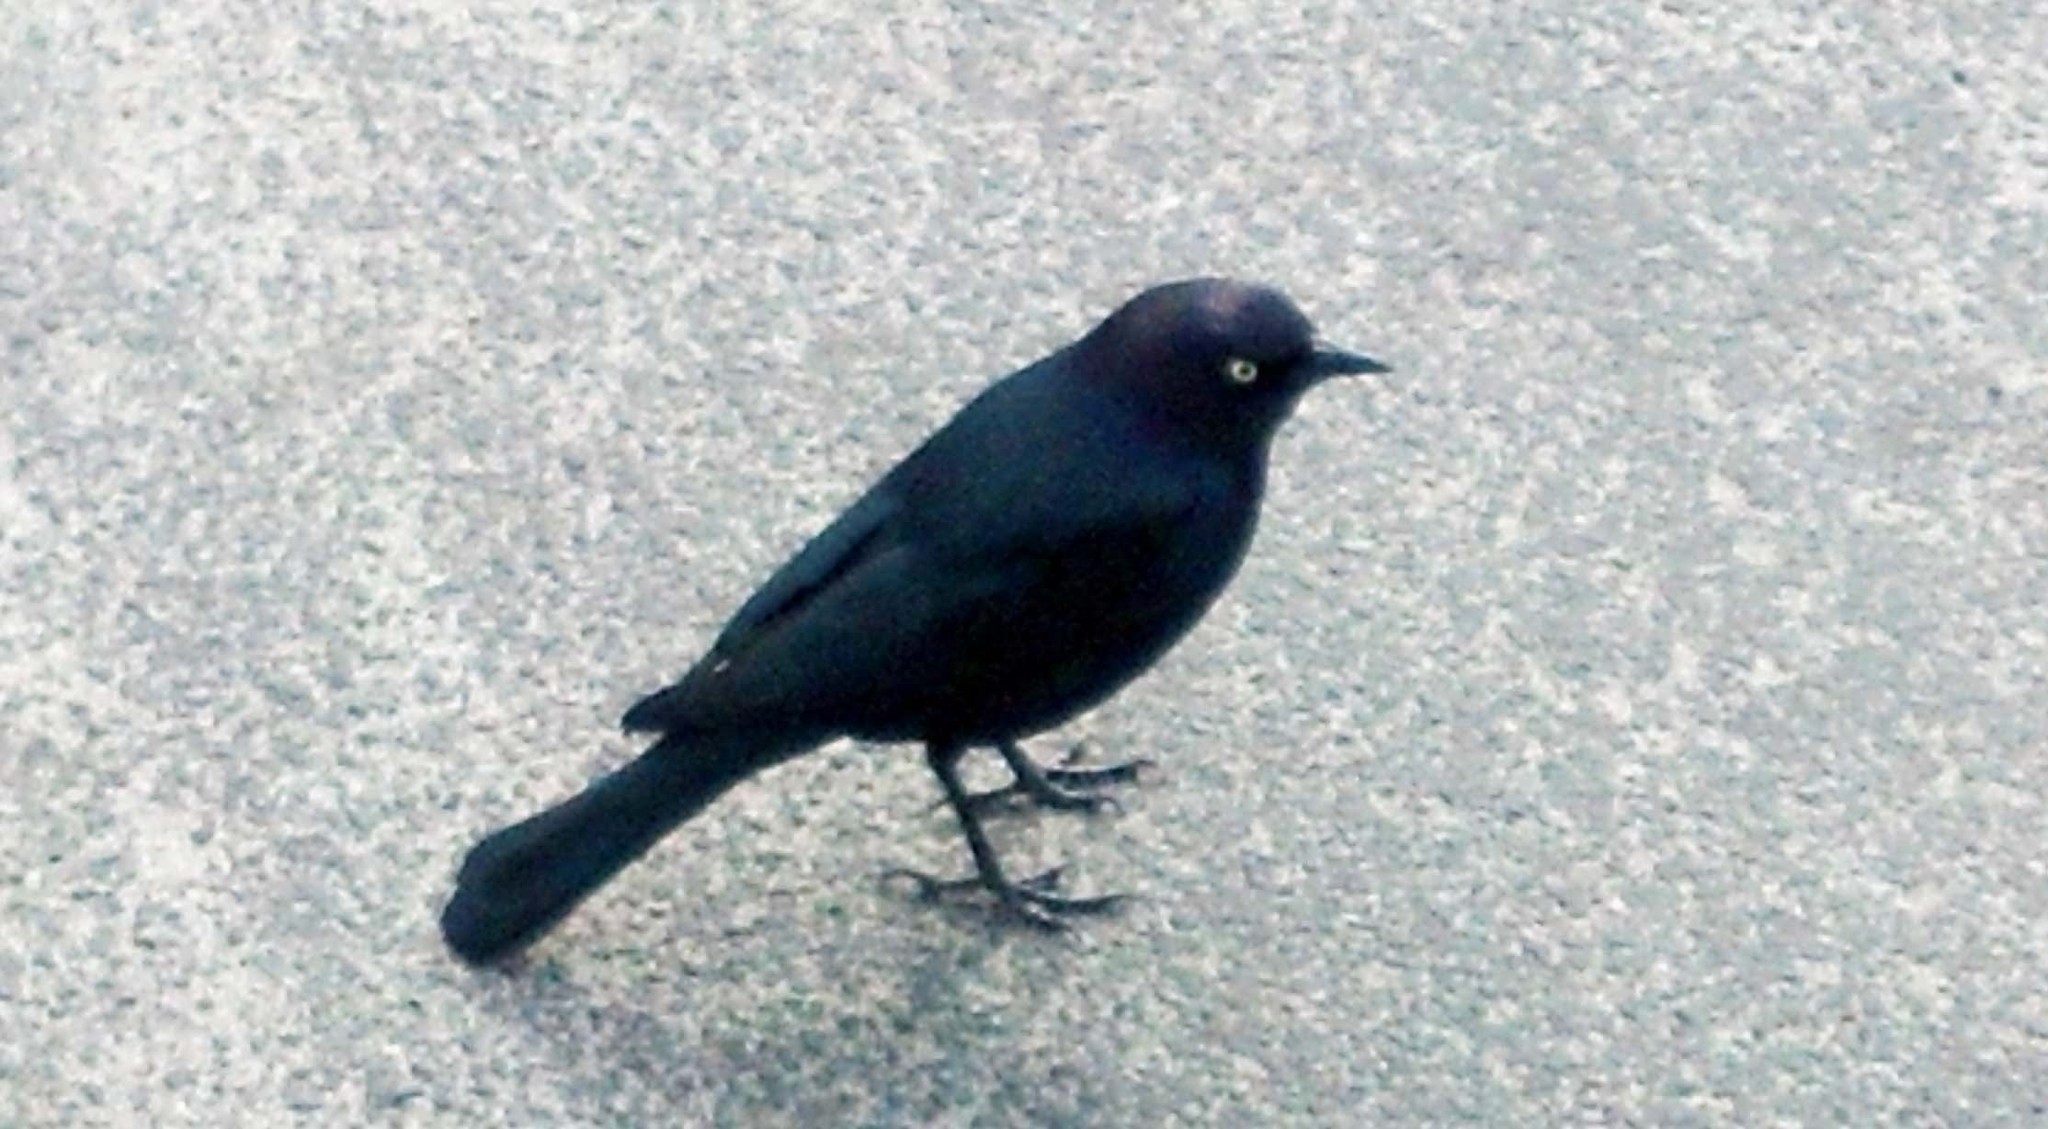 Image of Brewer's blackbird